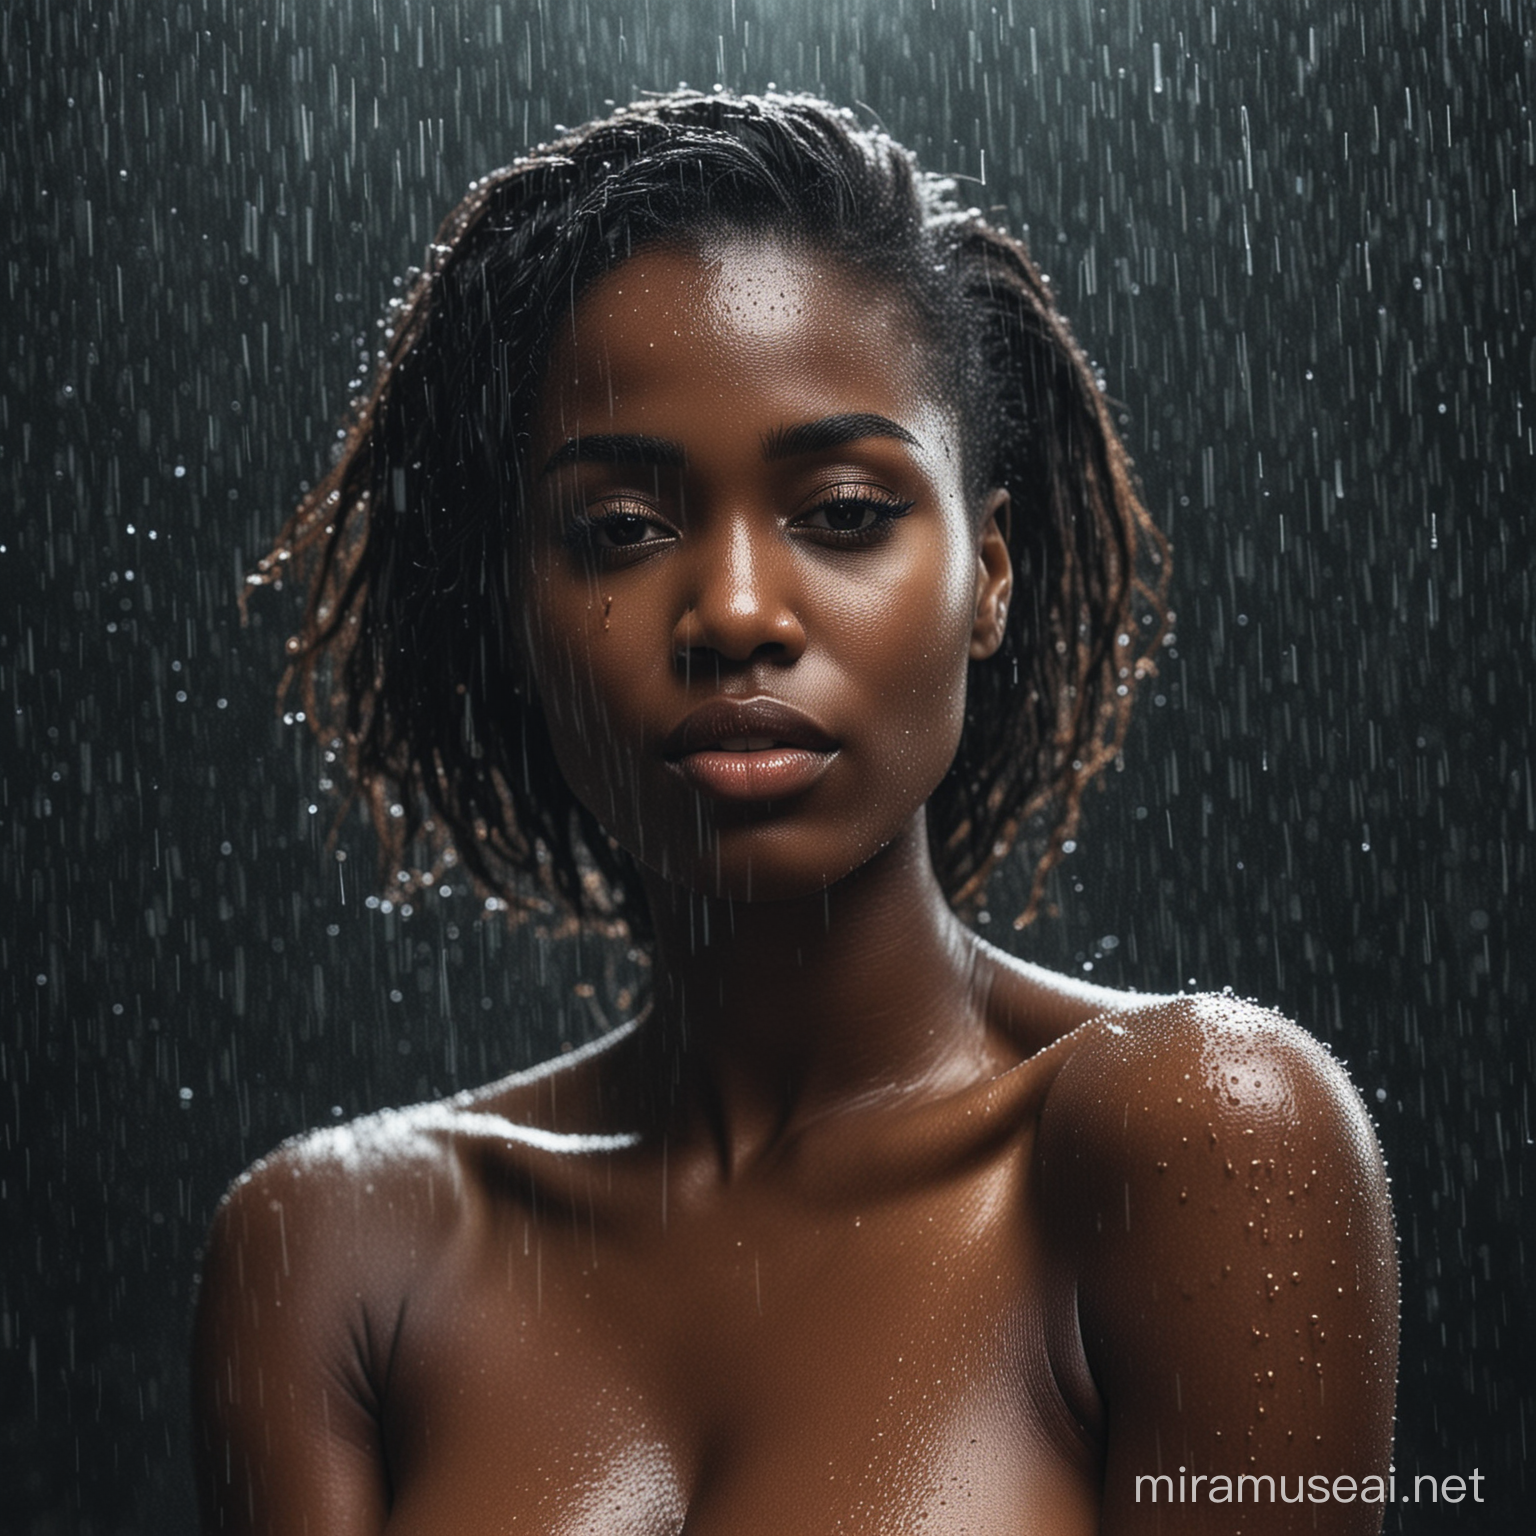 Sensual Melanin Woman Embracing the Night Rain